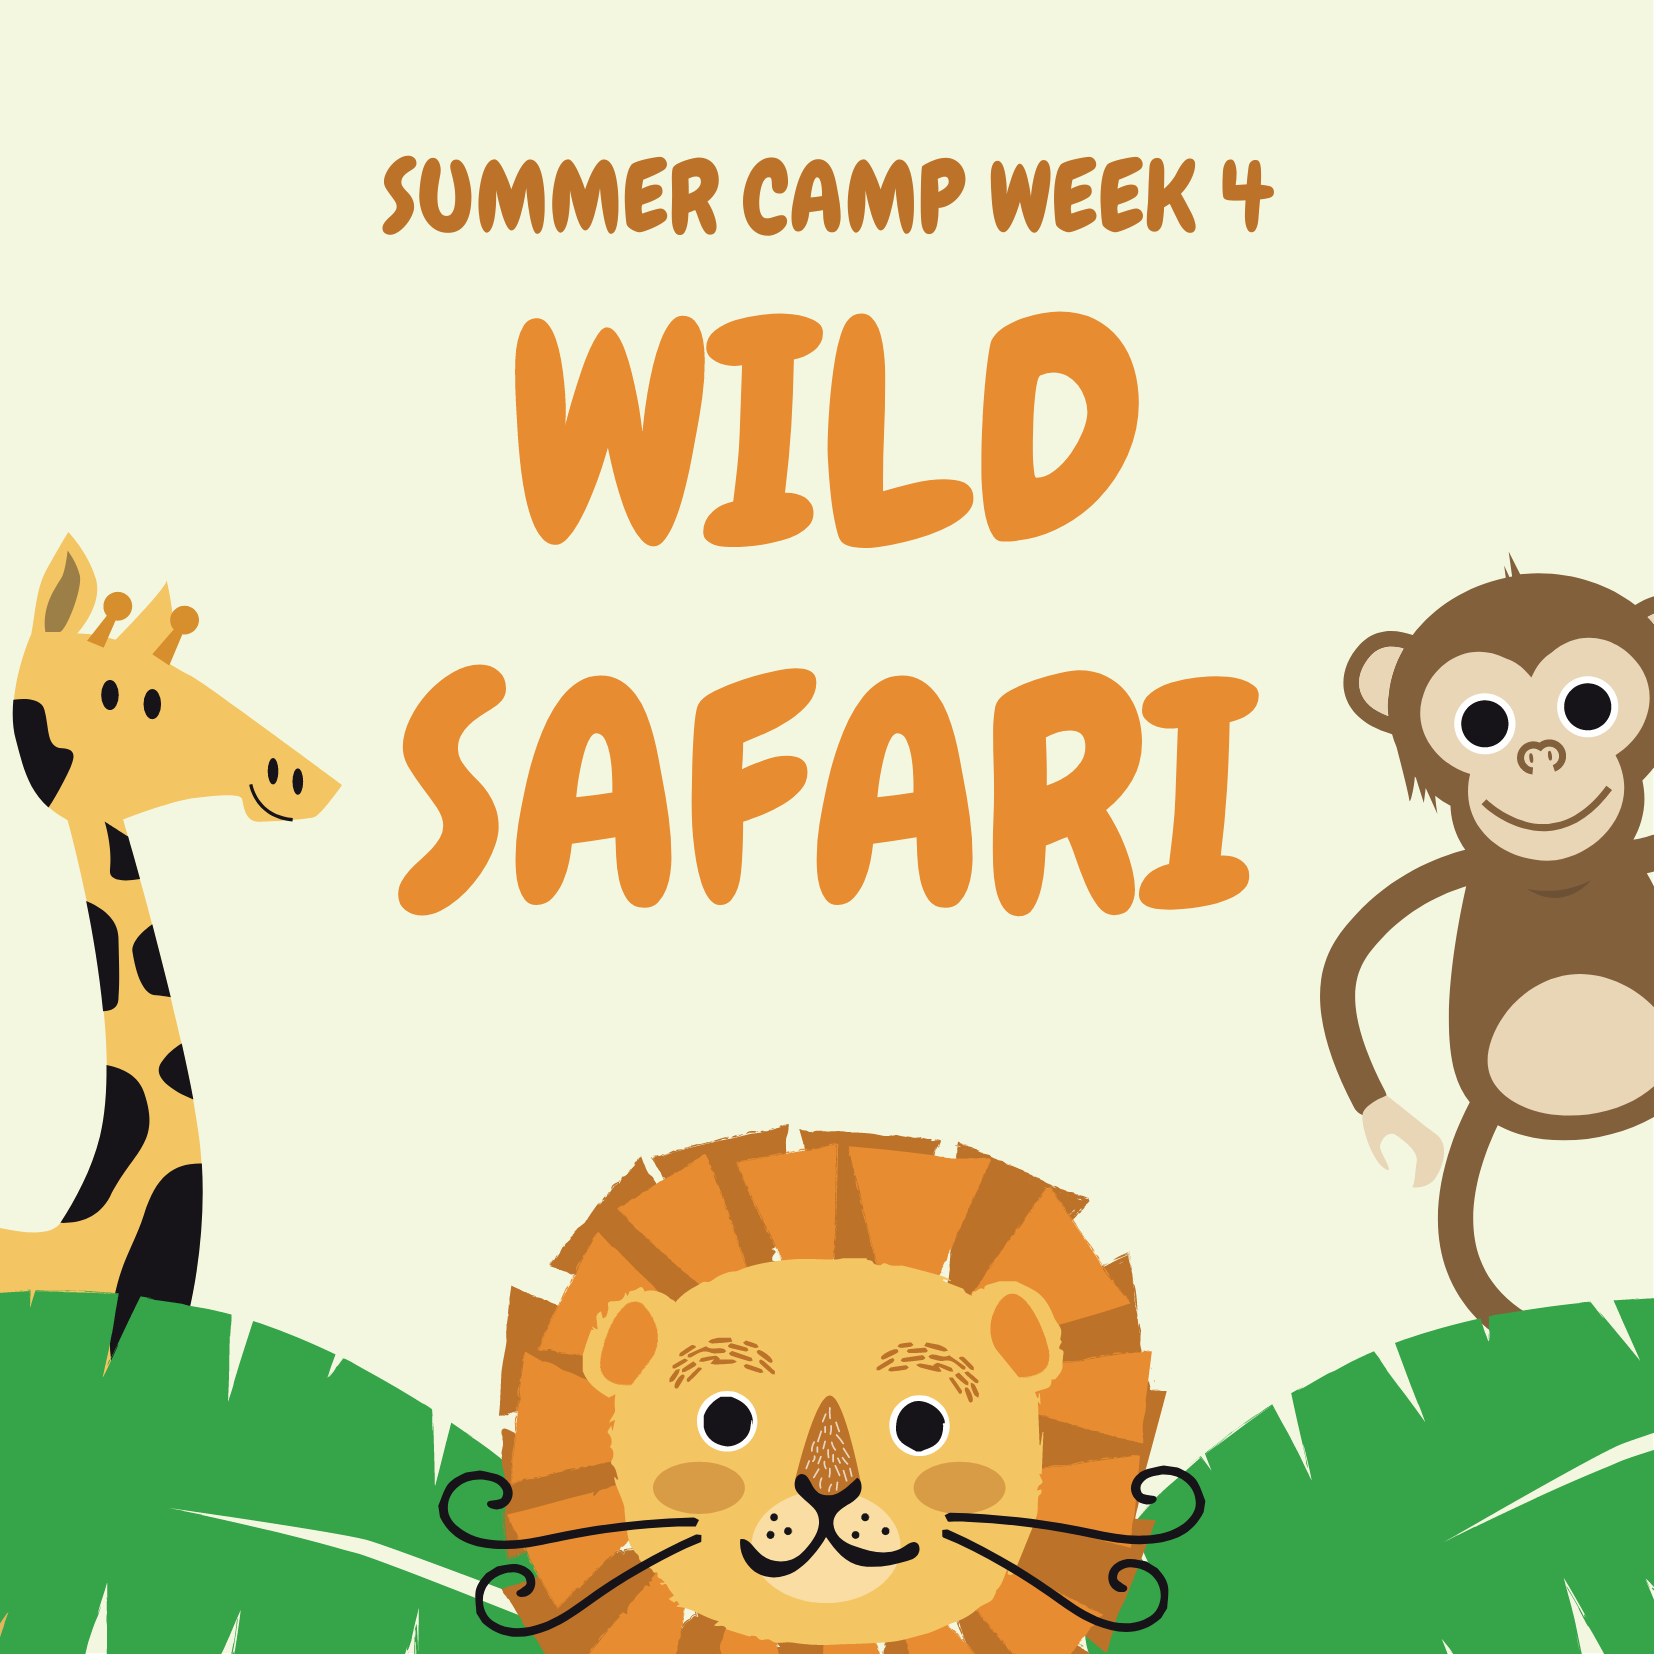 Week Four (7/24 - 7/28): WILD SAFARI